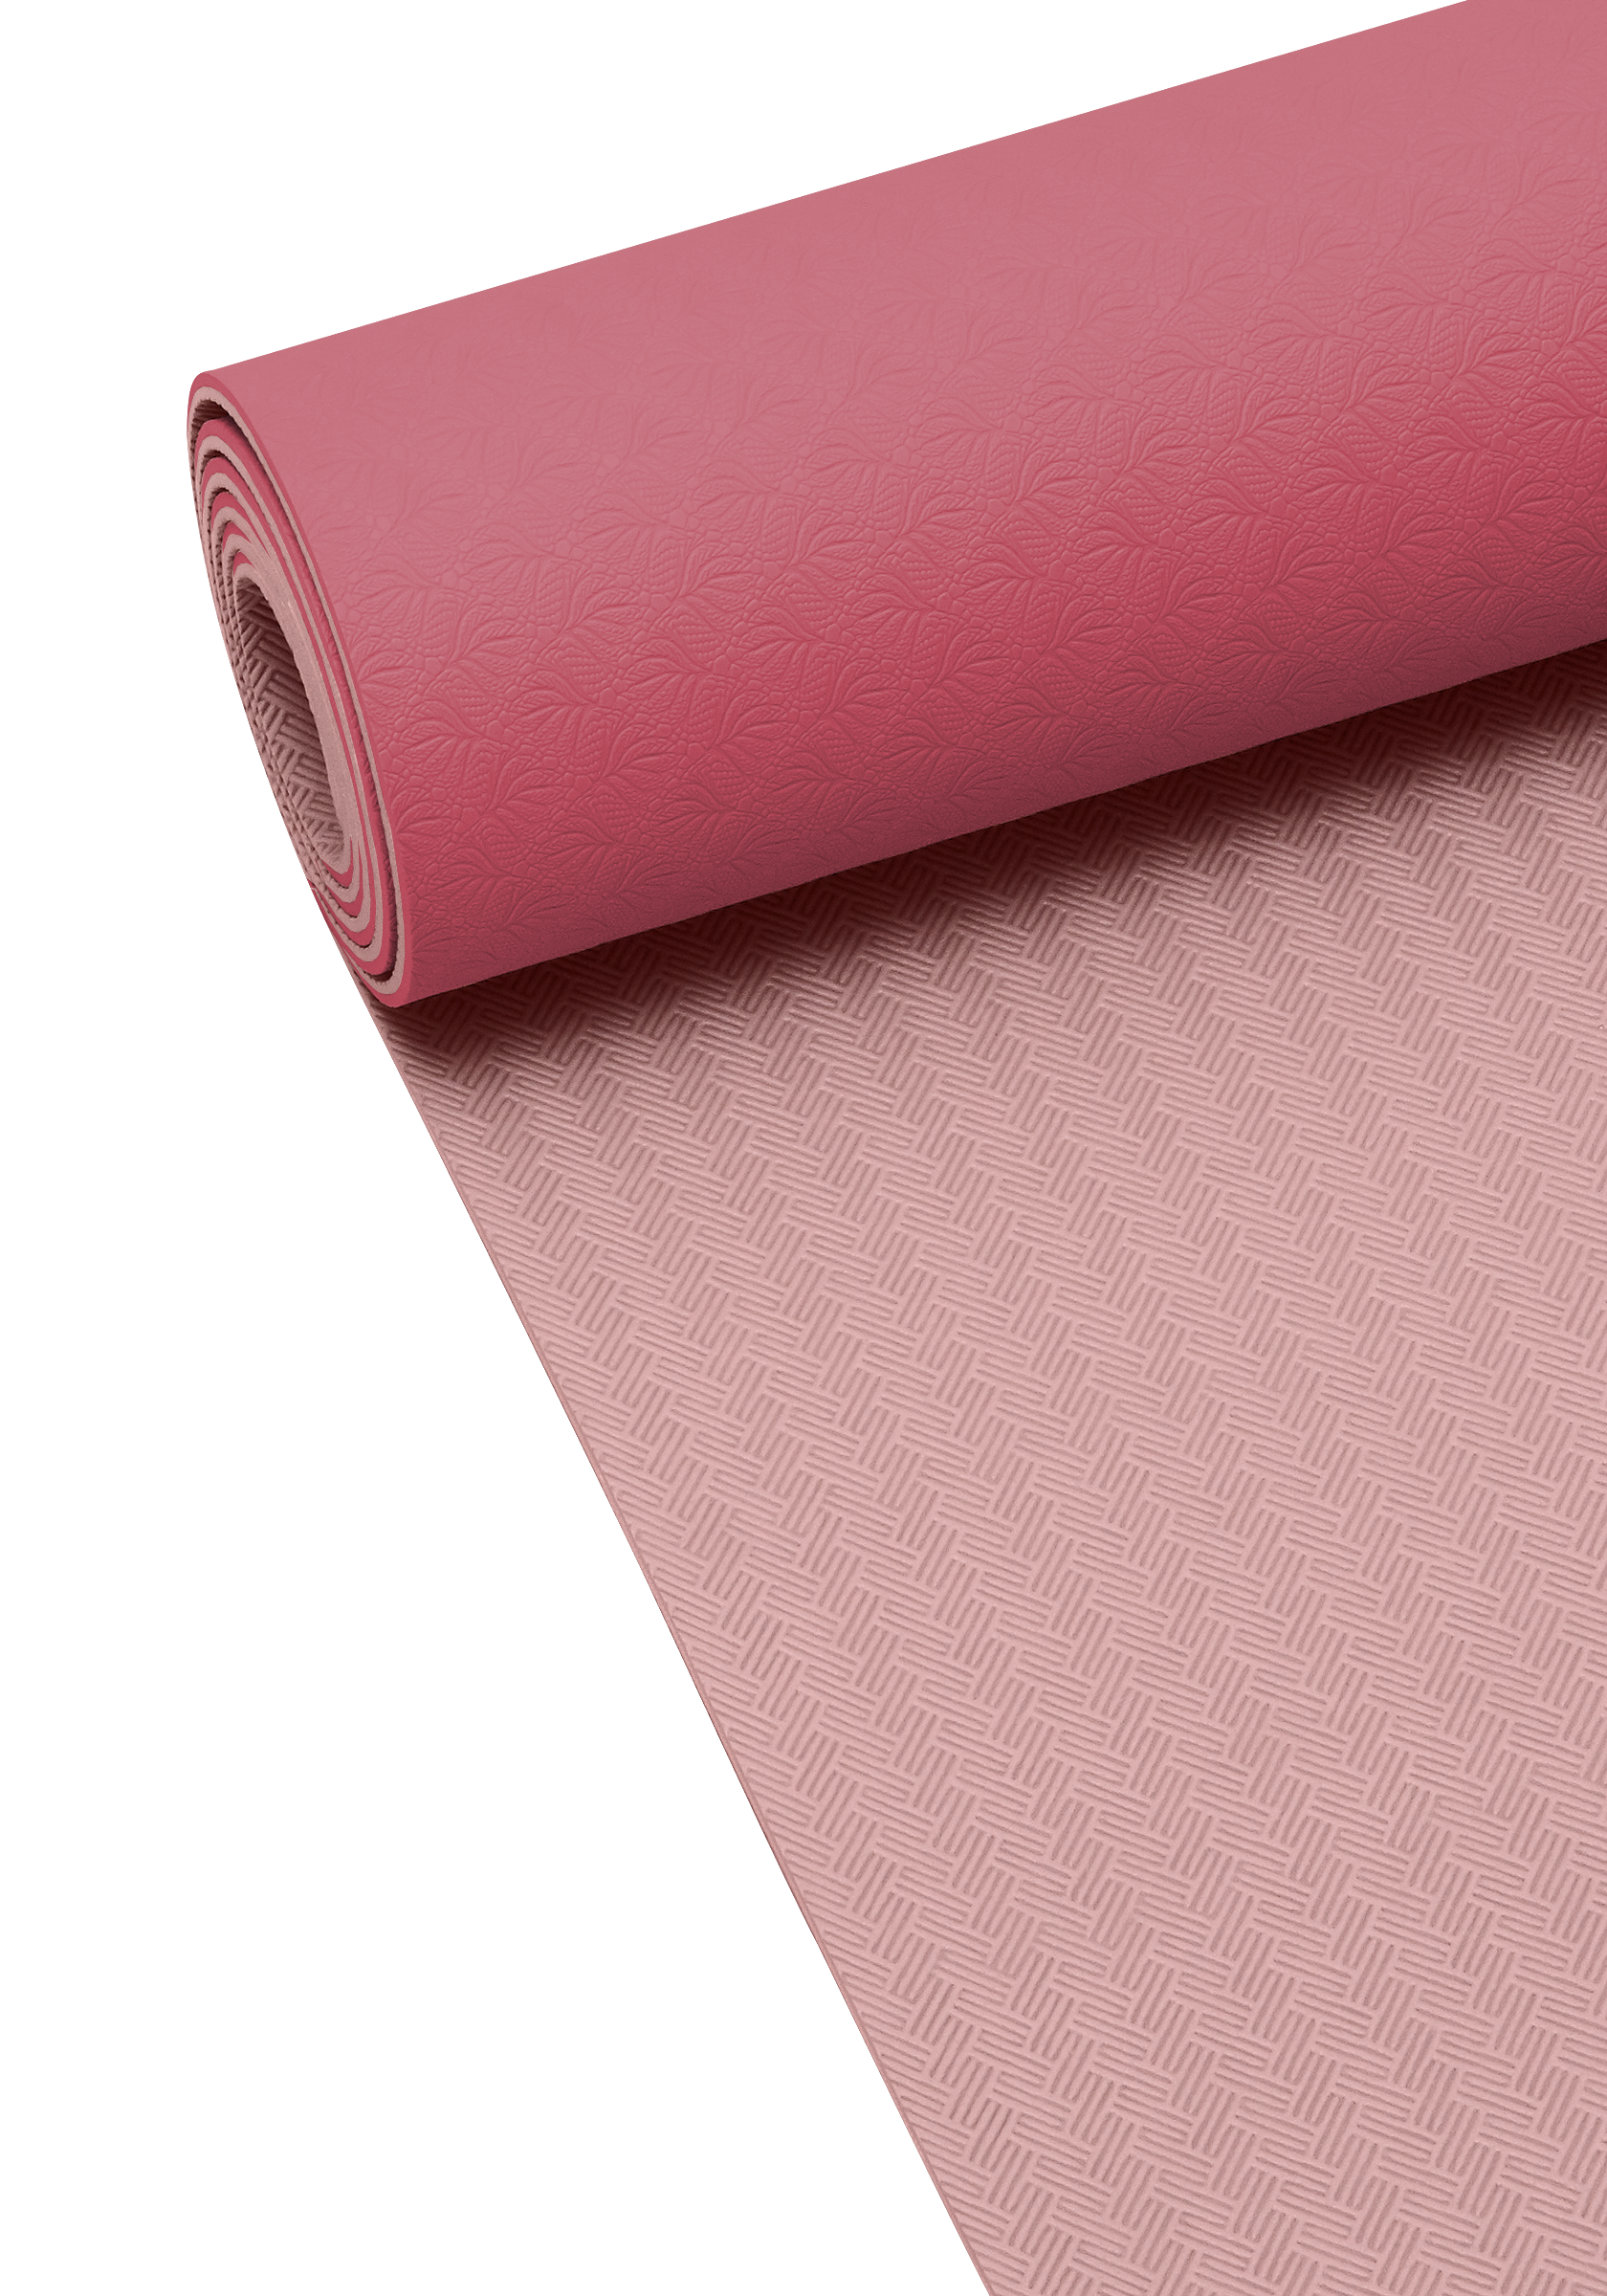 Pink Mandala NBR YOGA MAT, Thick yoga Mat size 6mm x 60cm x 190cm Long For  comfort.